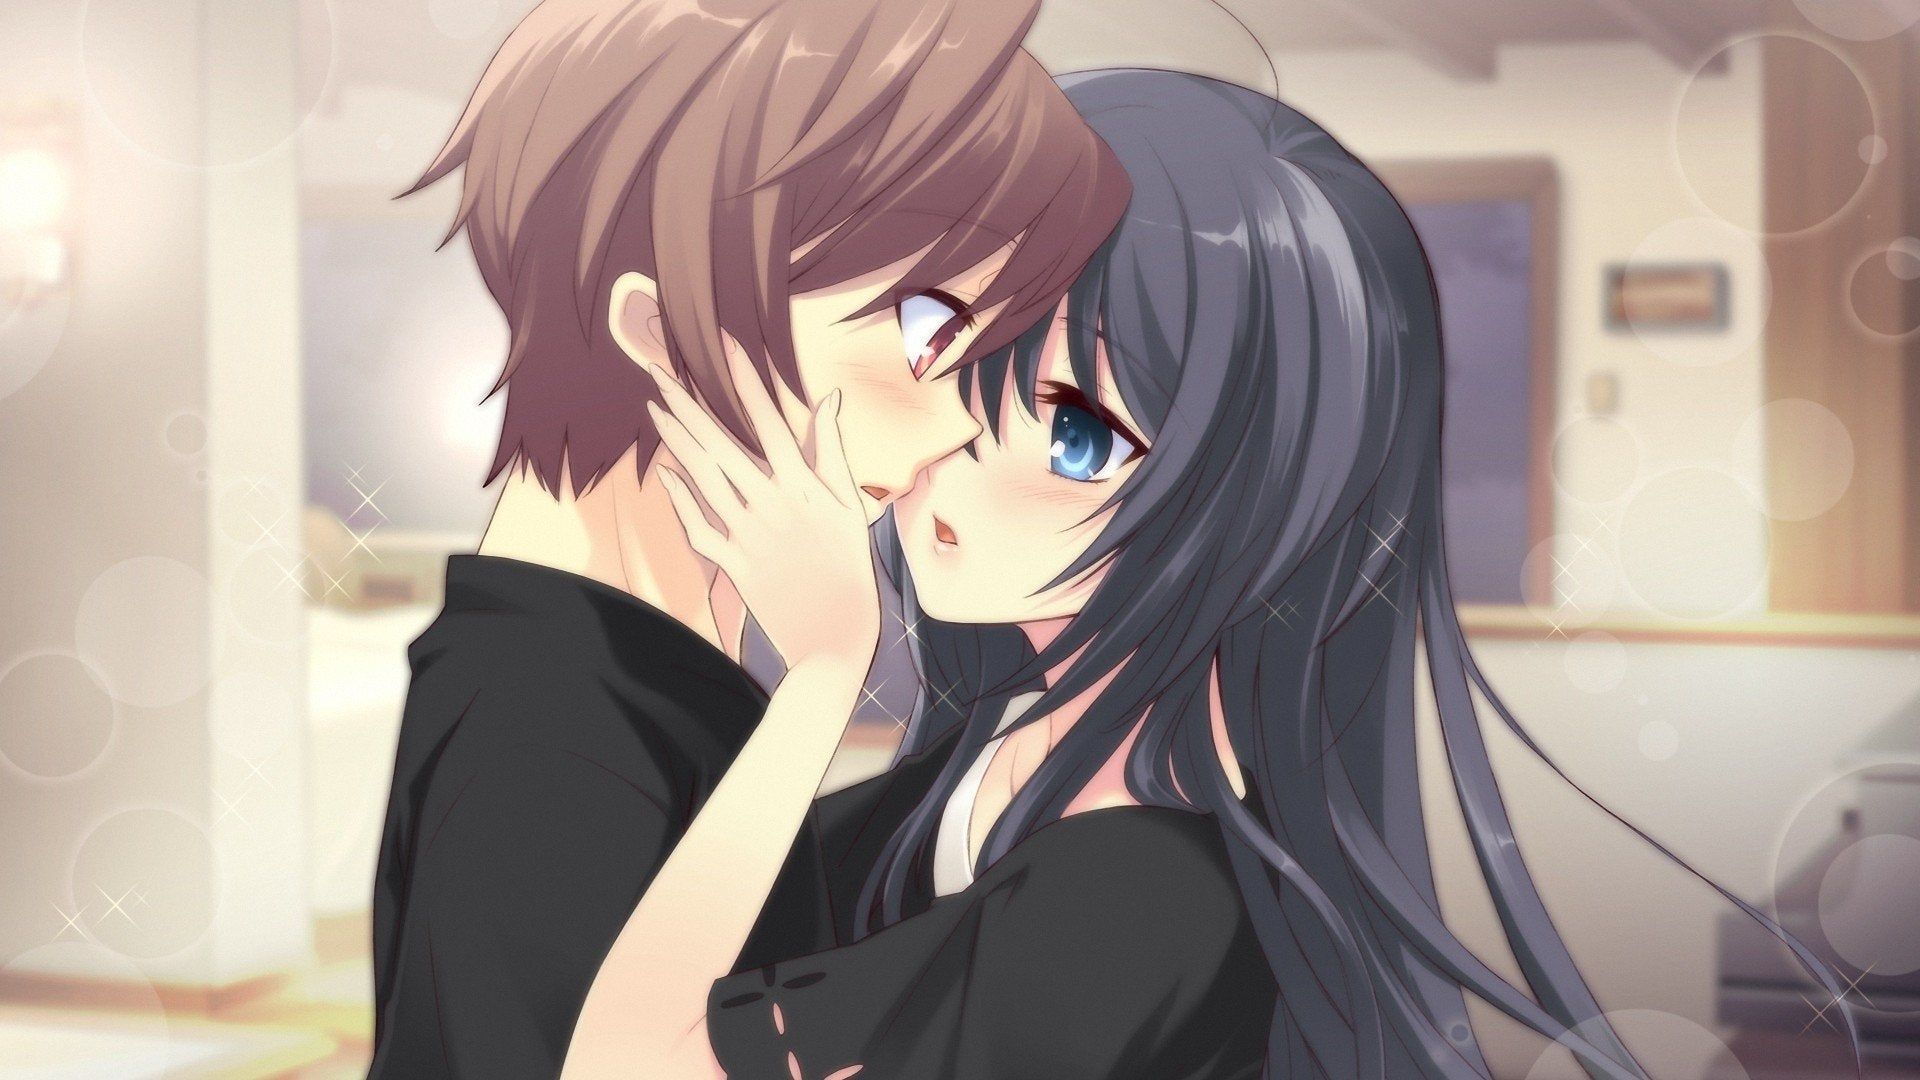 Cute Anime Couple Kiss Wallpaper [1920x1080]